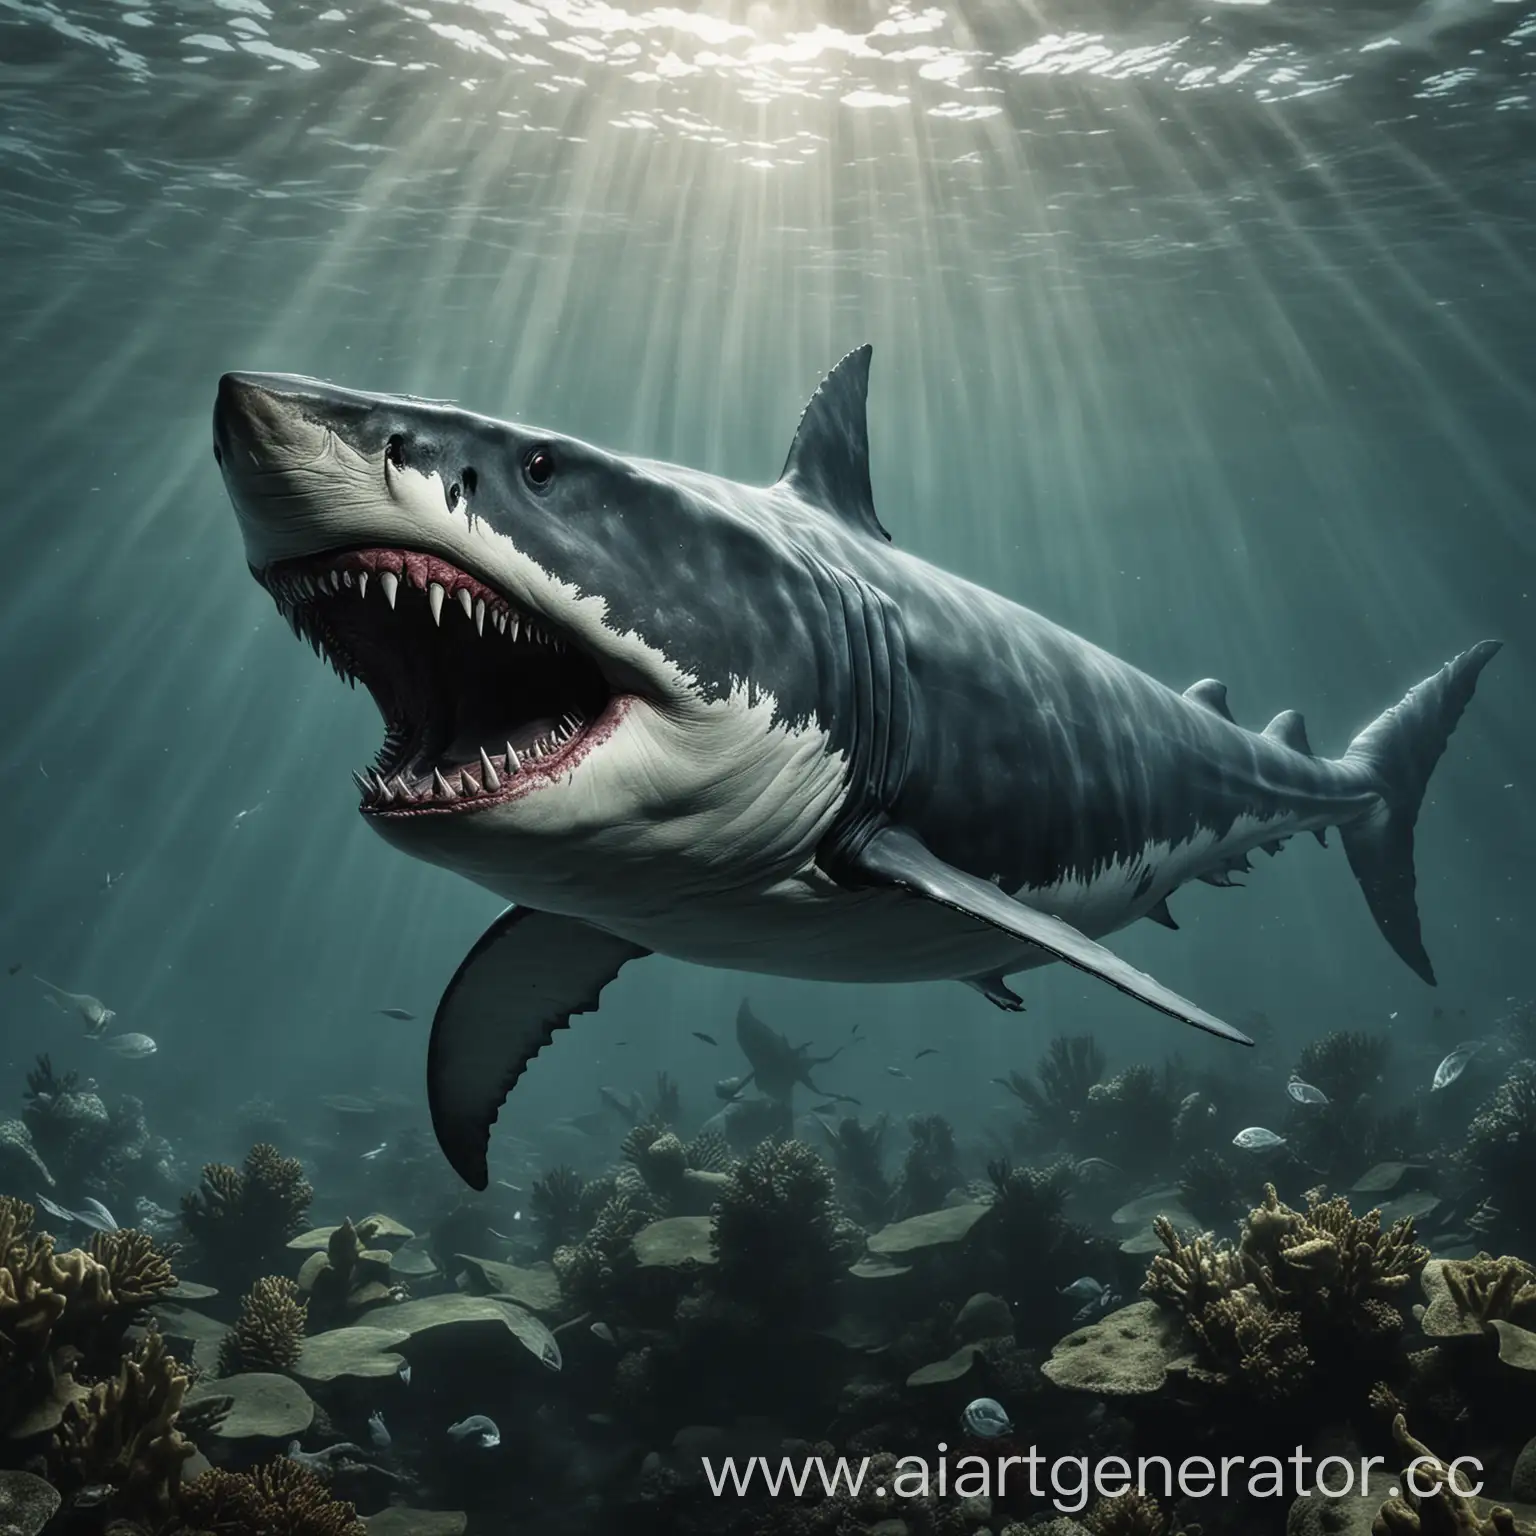 Enormous-Megalodon-Shark-Emerging-from-Deep-Ocean-Waters